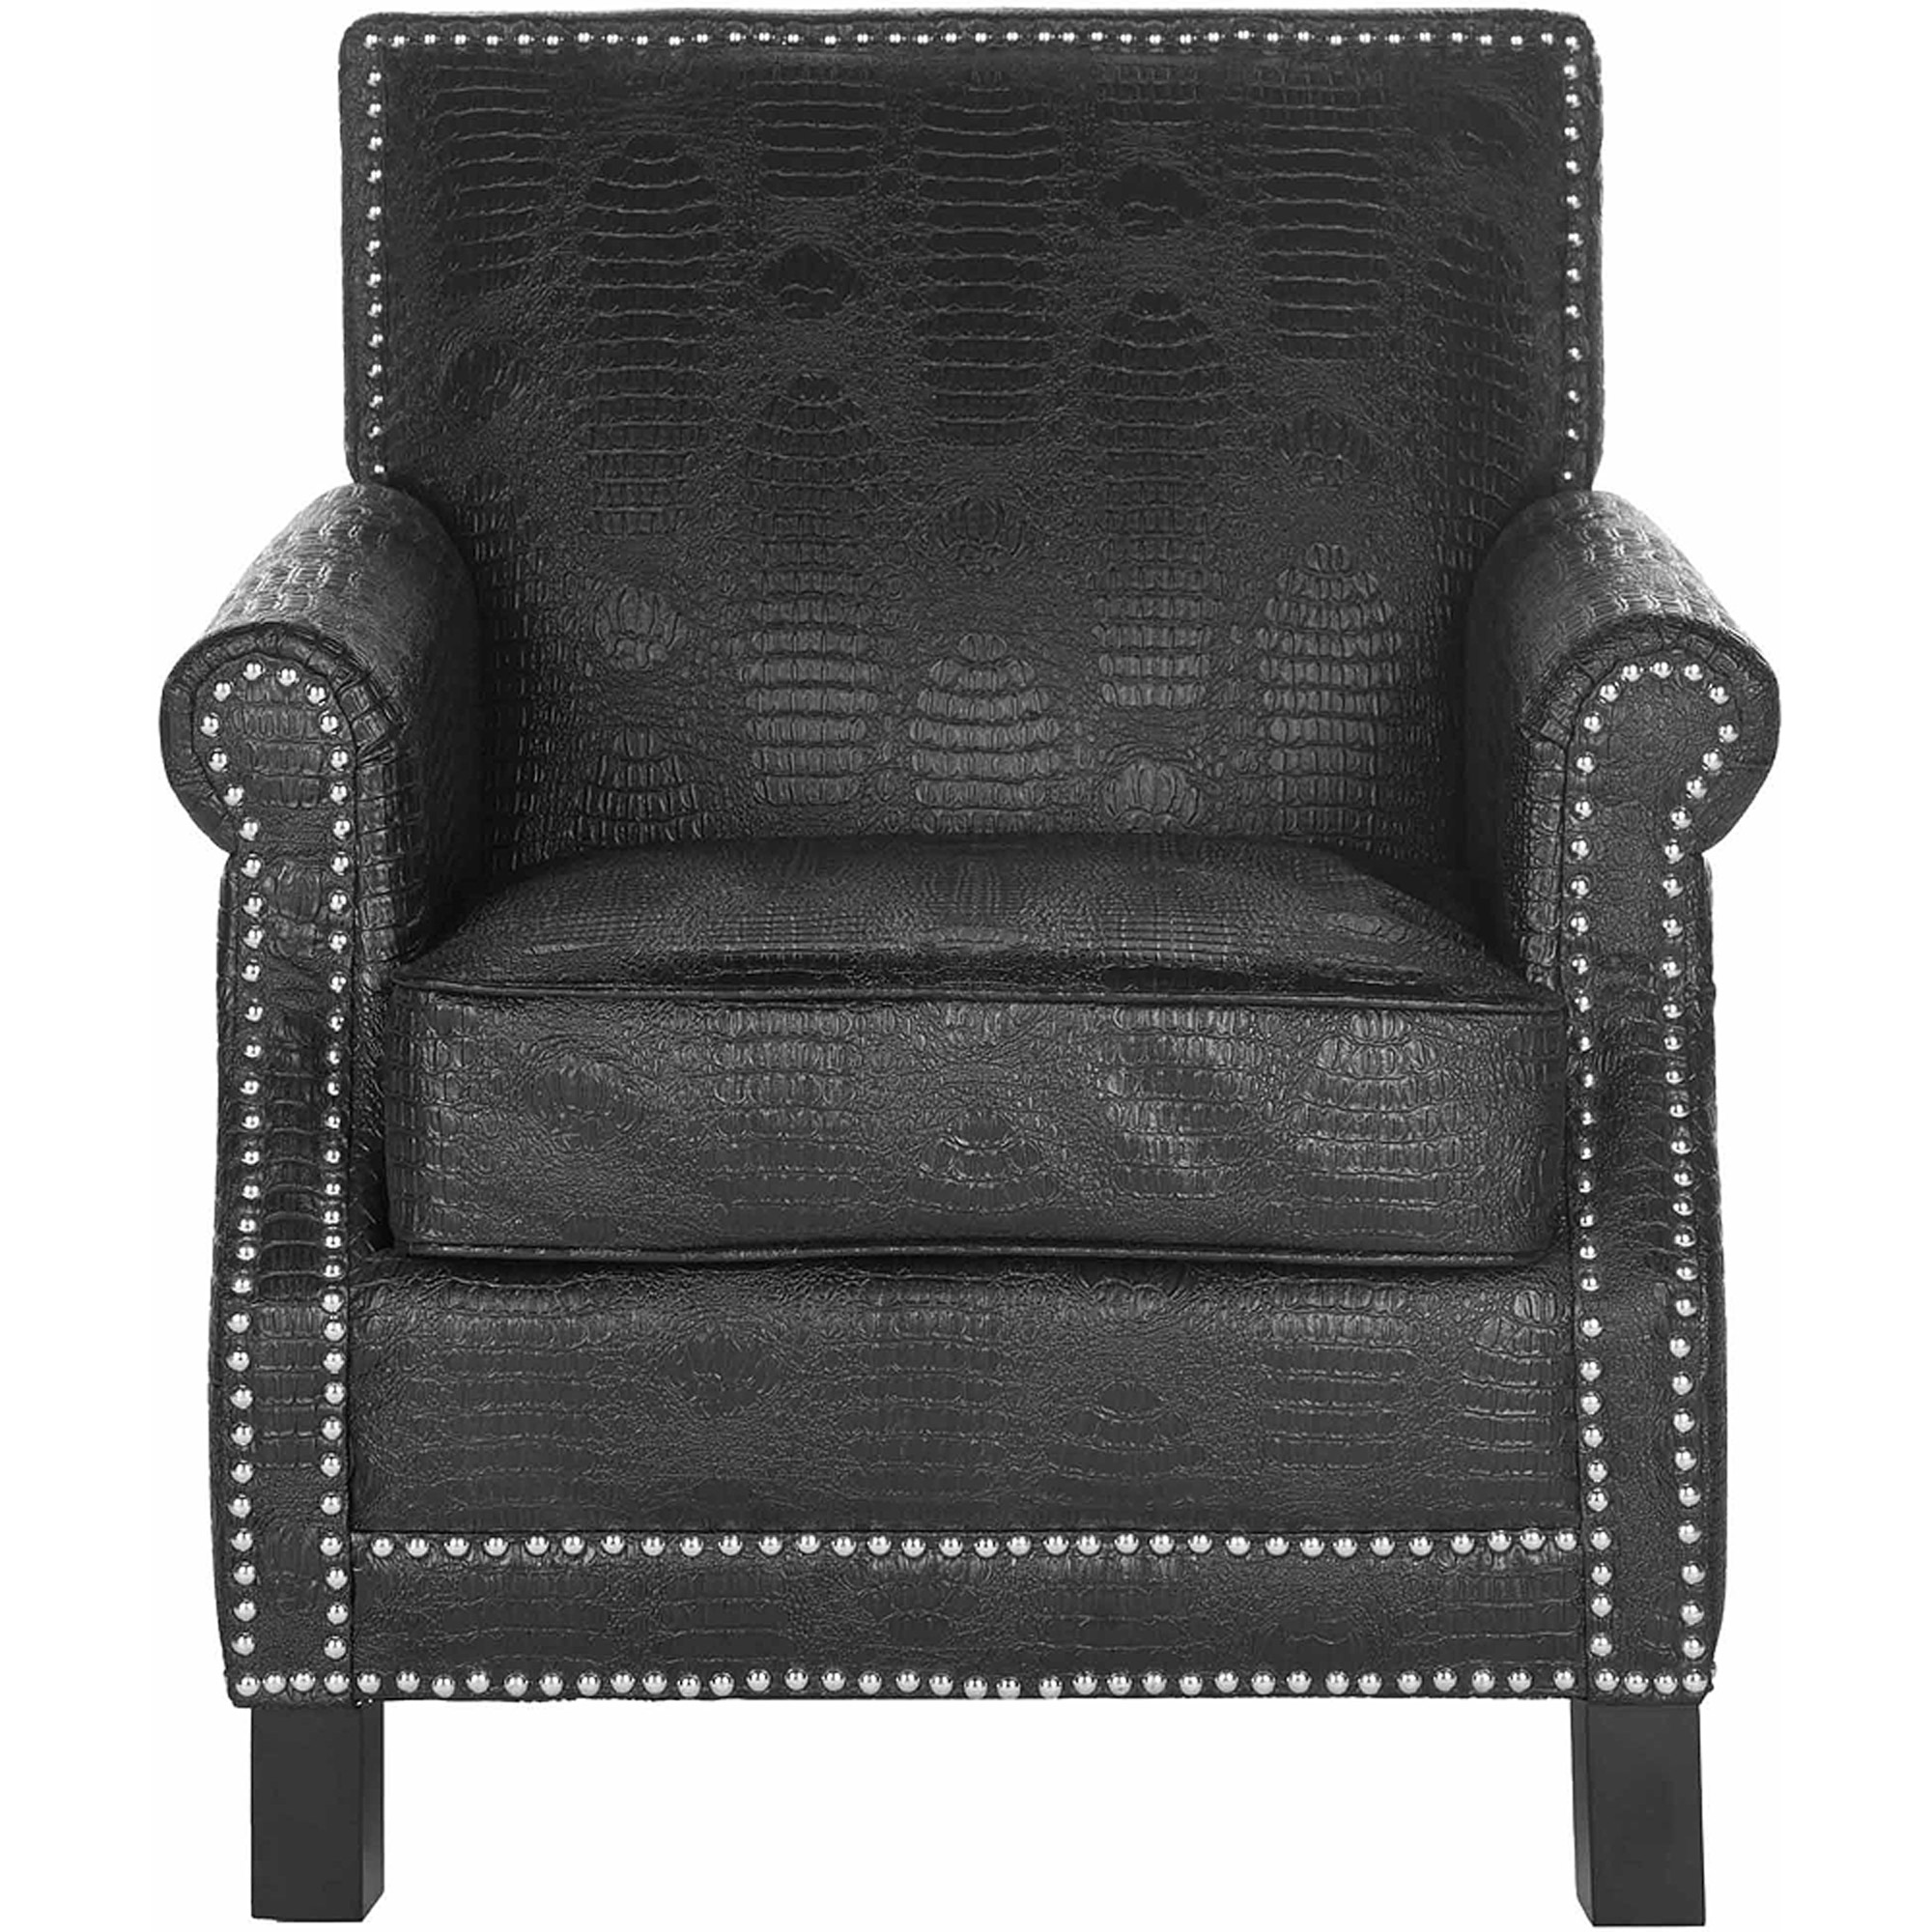 SAFAVIEH Easton Rustic Glam Upholstered Club Chair w/ Nailheads, Black Crocodile - image 2 of 4